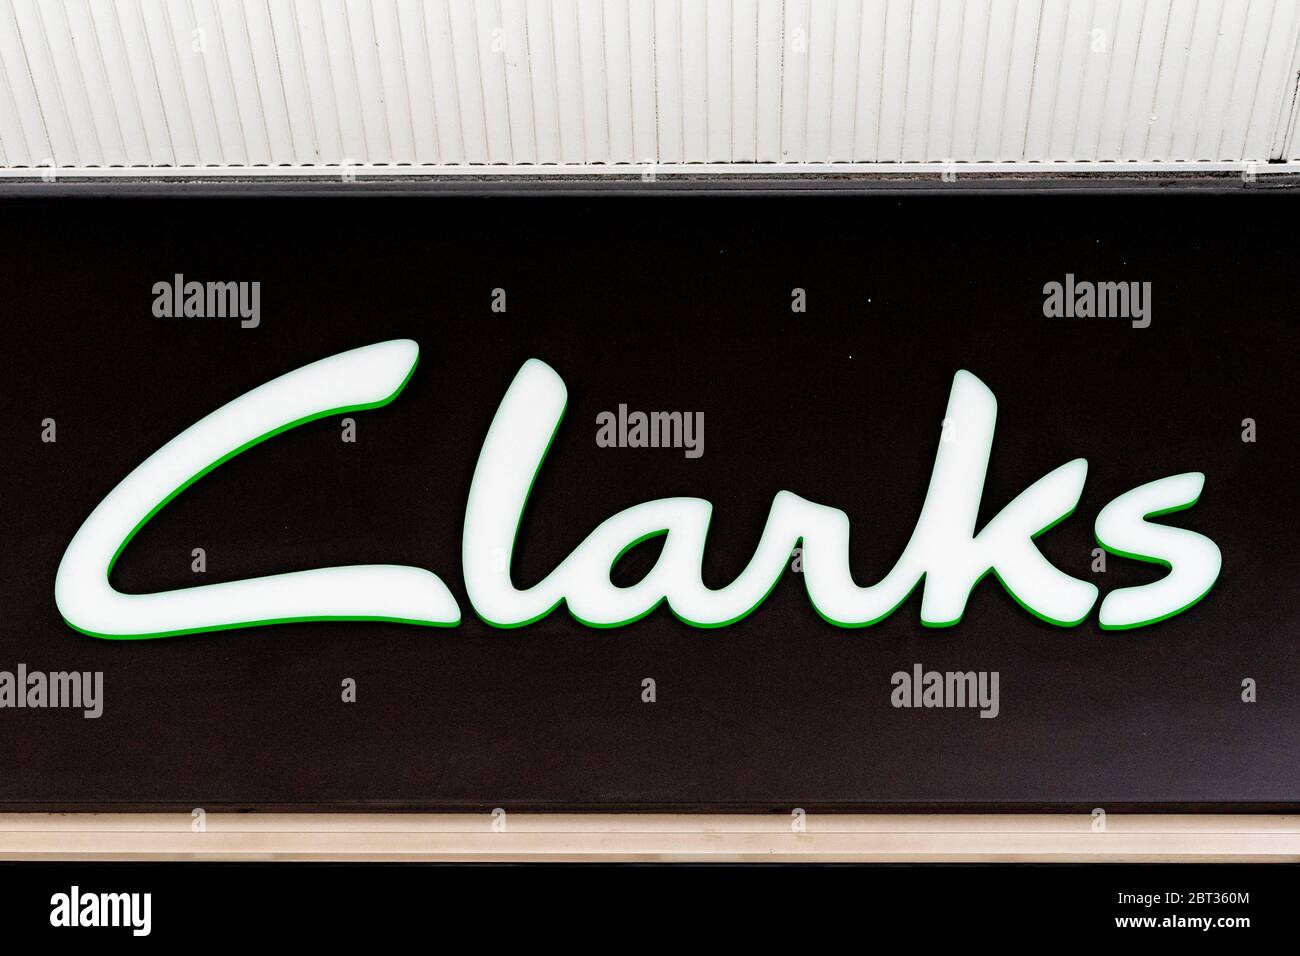 clarks shoes jobs london